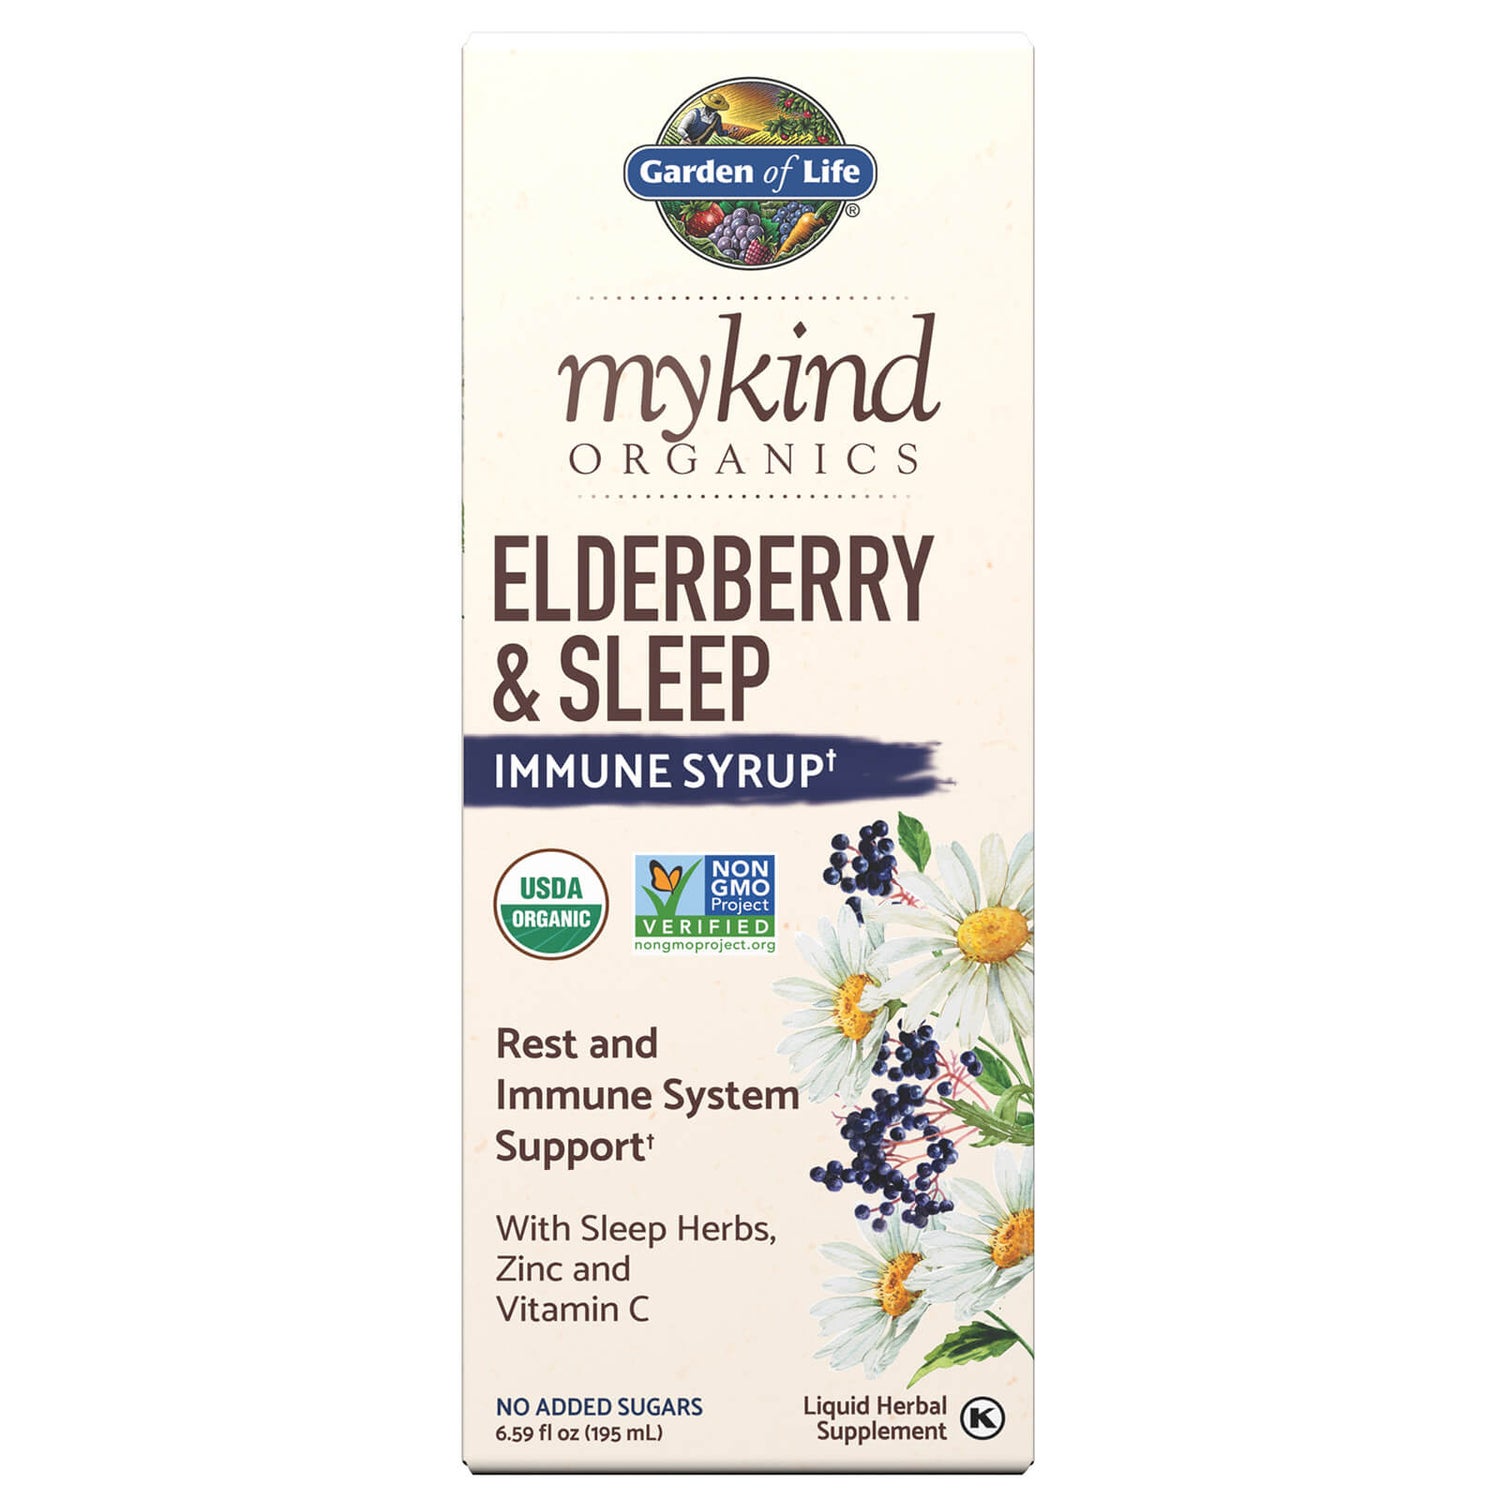 Mykind Organics Vlierbessen & Slaap immuunsiroop - 195 ml